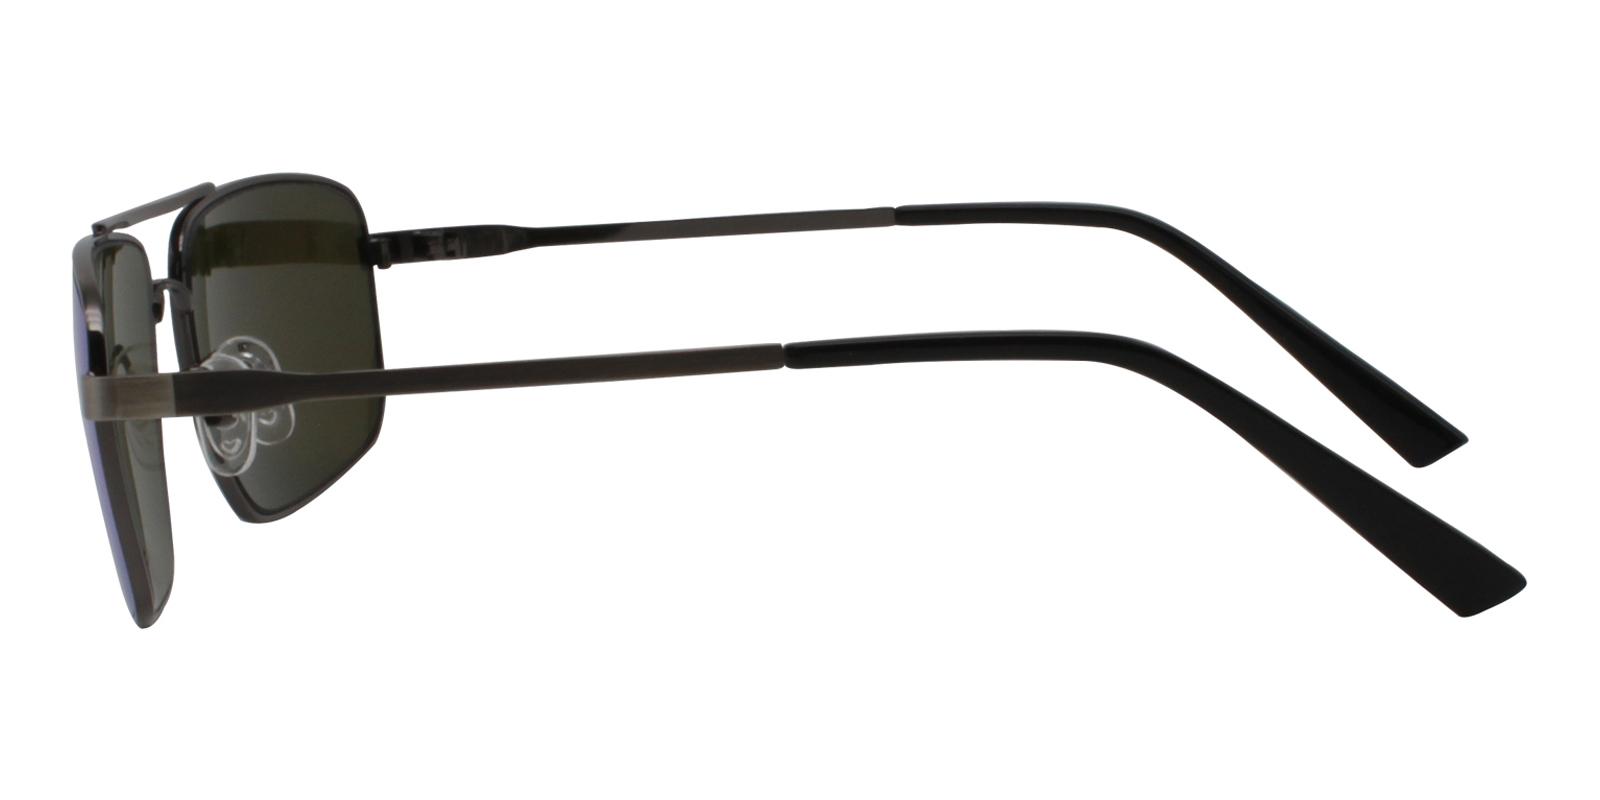 Ethan Gun Metal NosePads , Sunglasses Frames from ABBE Glasses